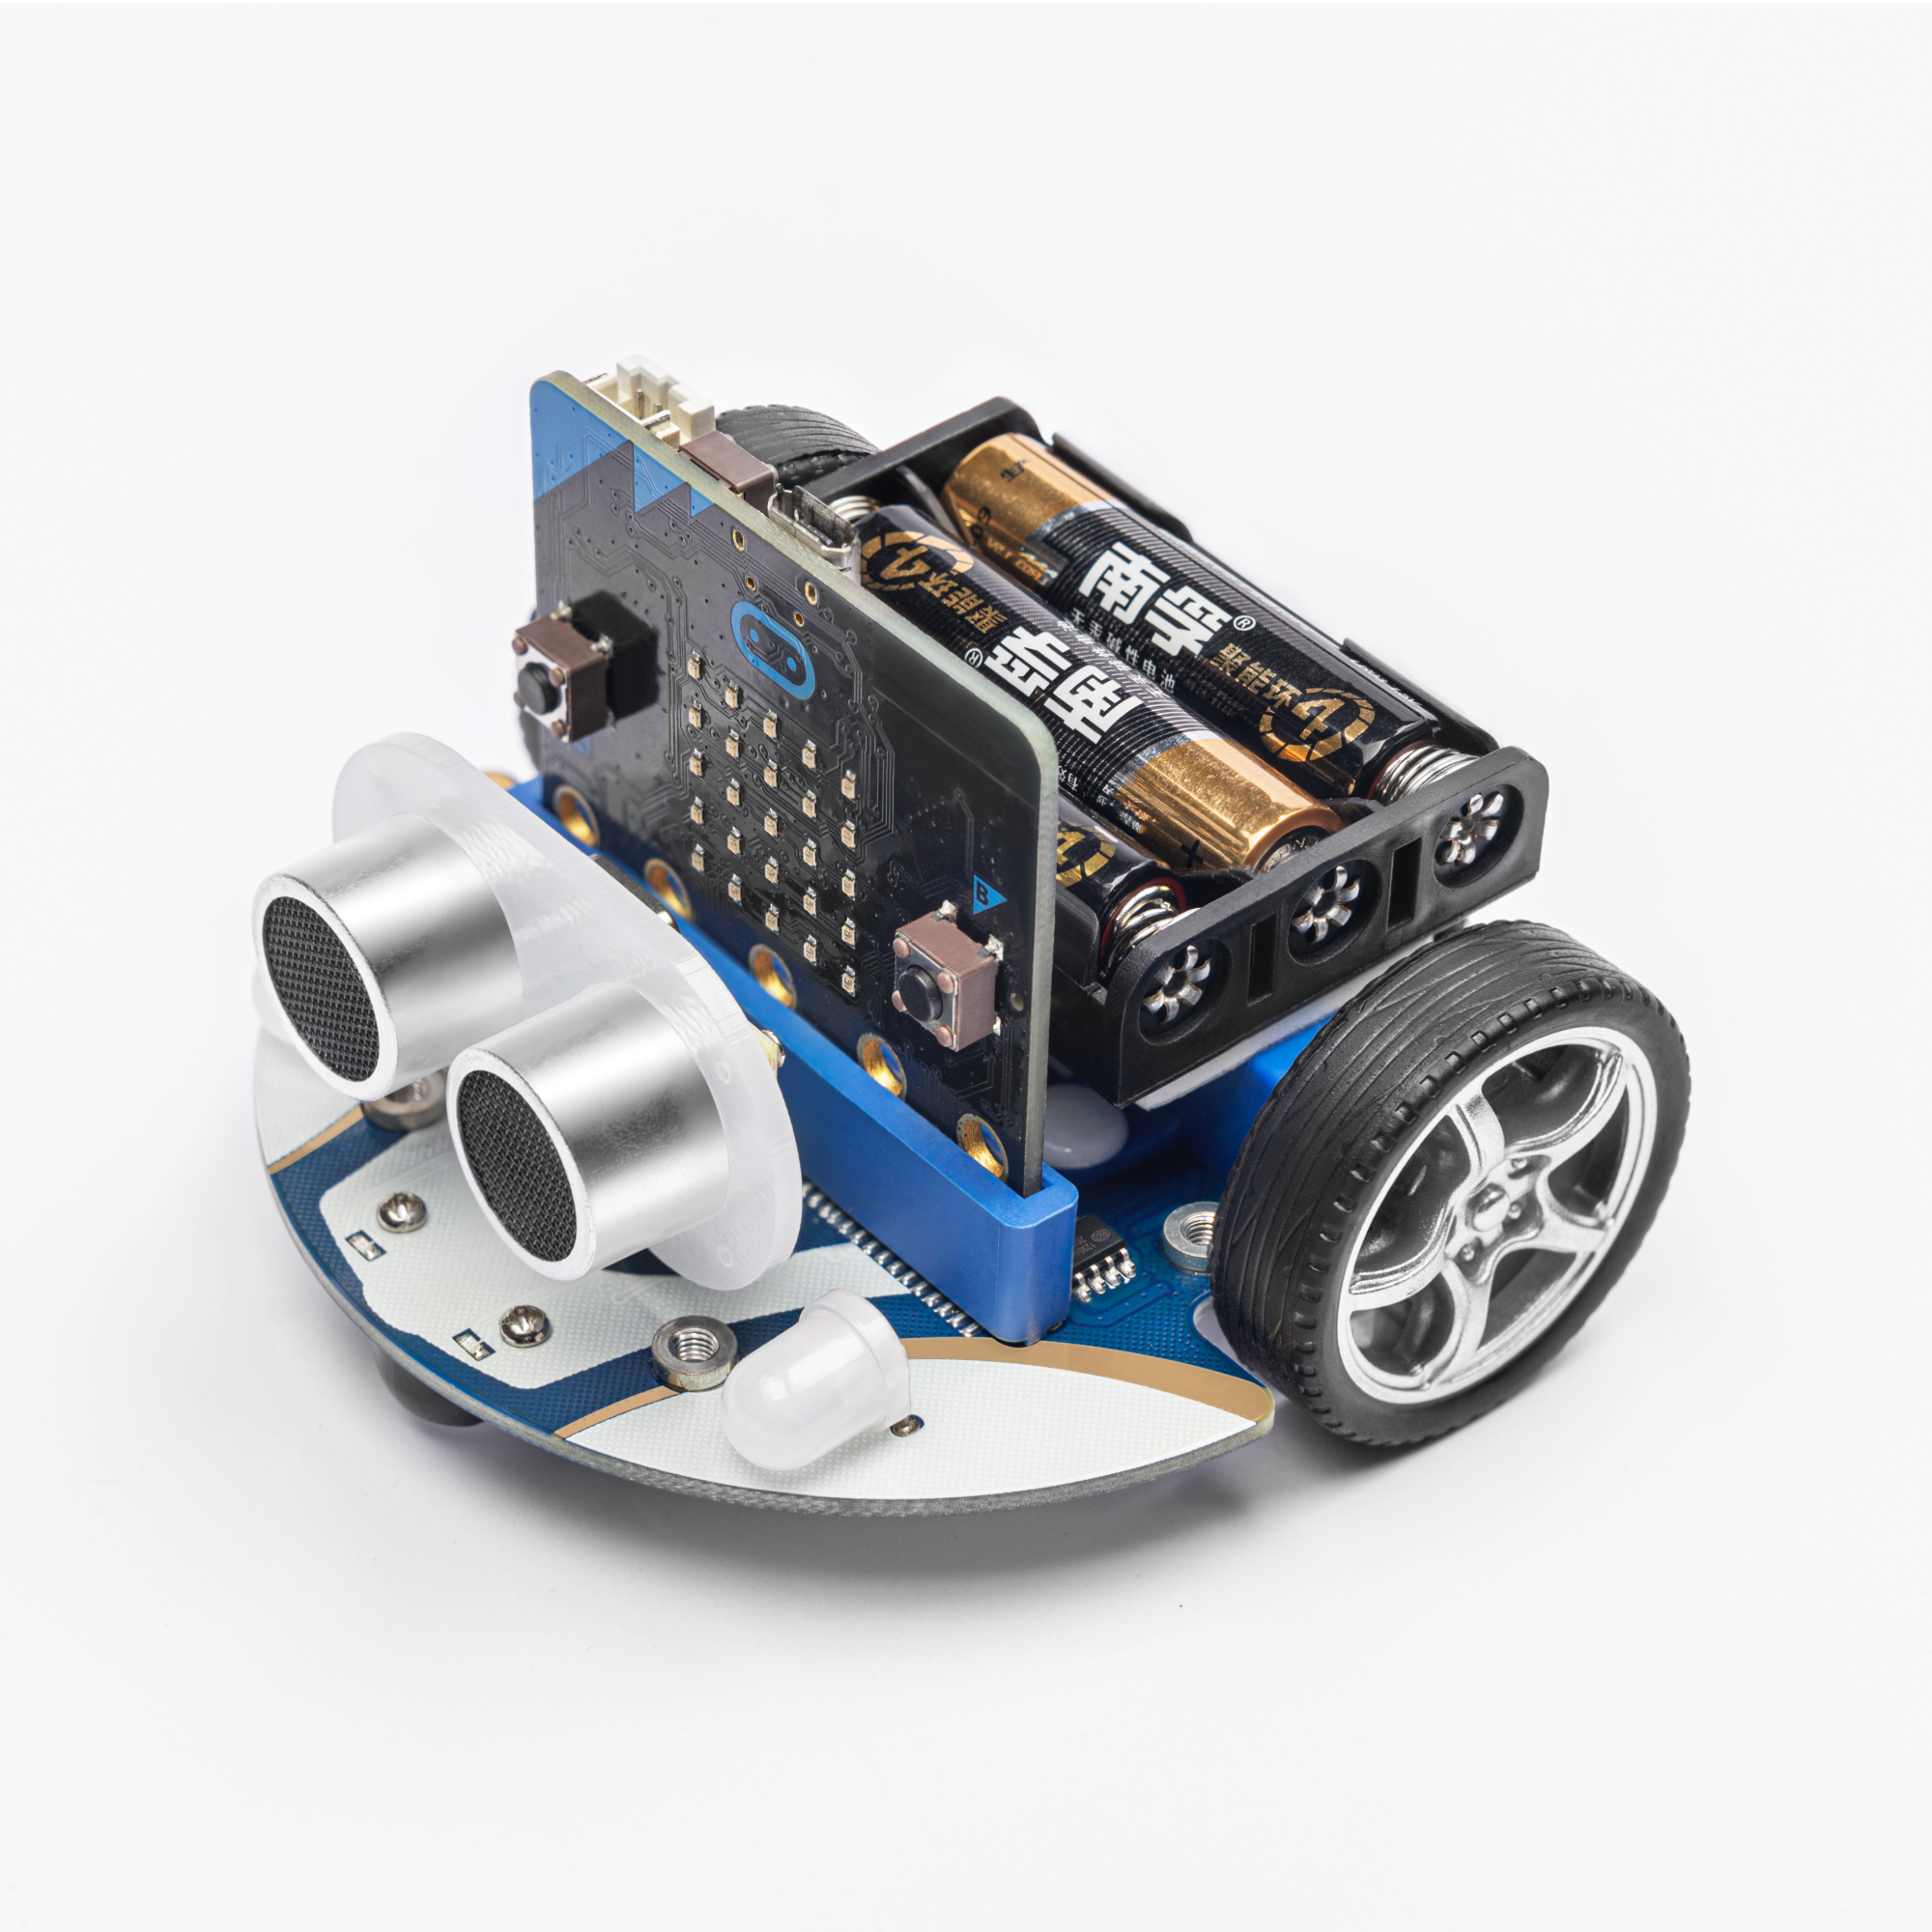 ELECFREAKS microbit Robot Smart Cutebot Kit (Without microbit Board)